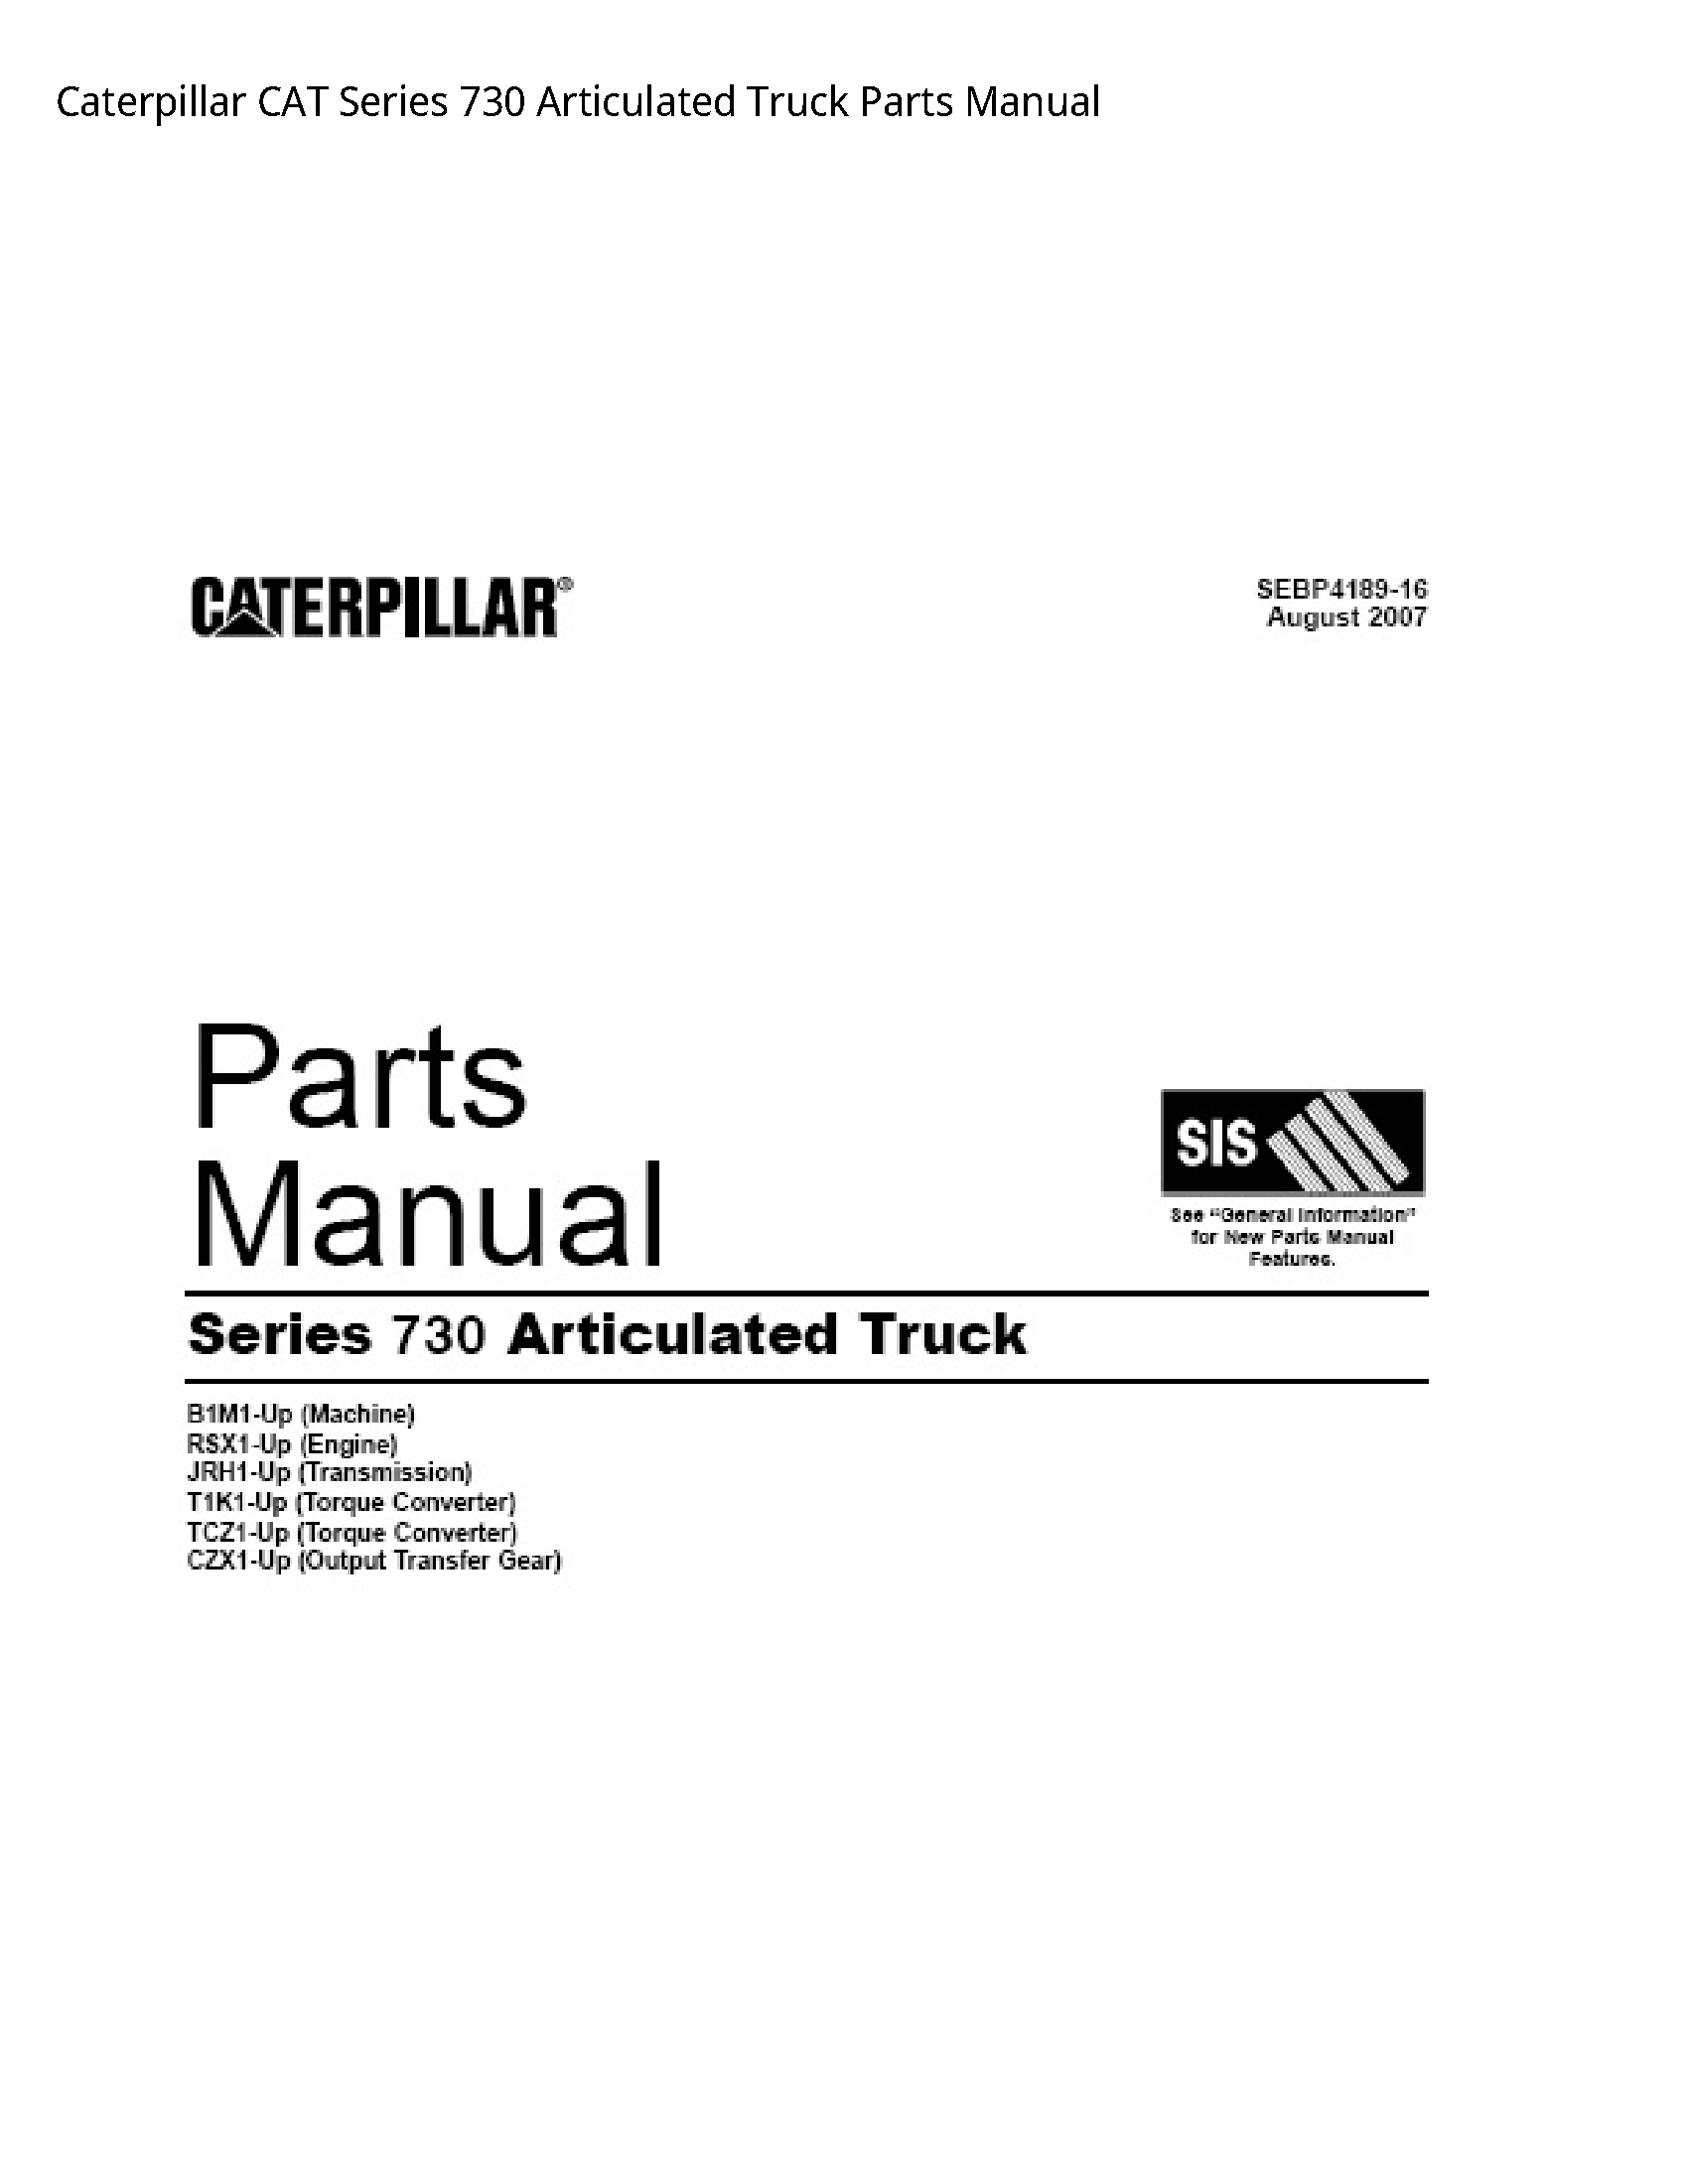 Caterpillar 730 CAT Series Articulated Truck Parts manual